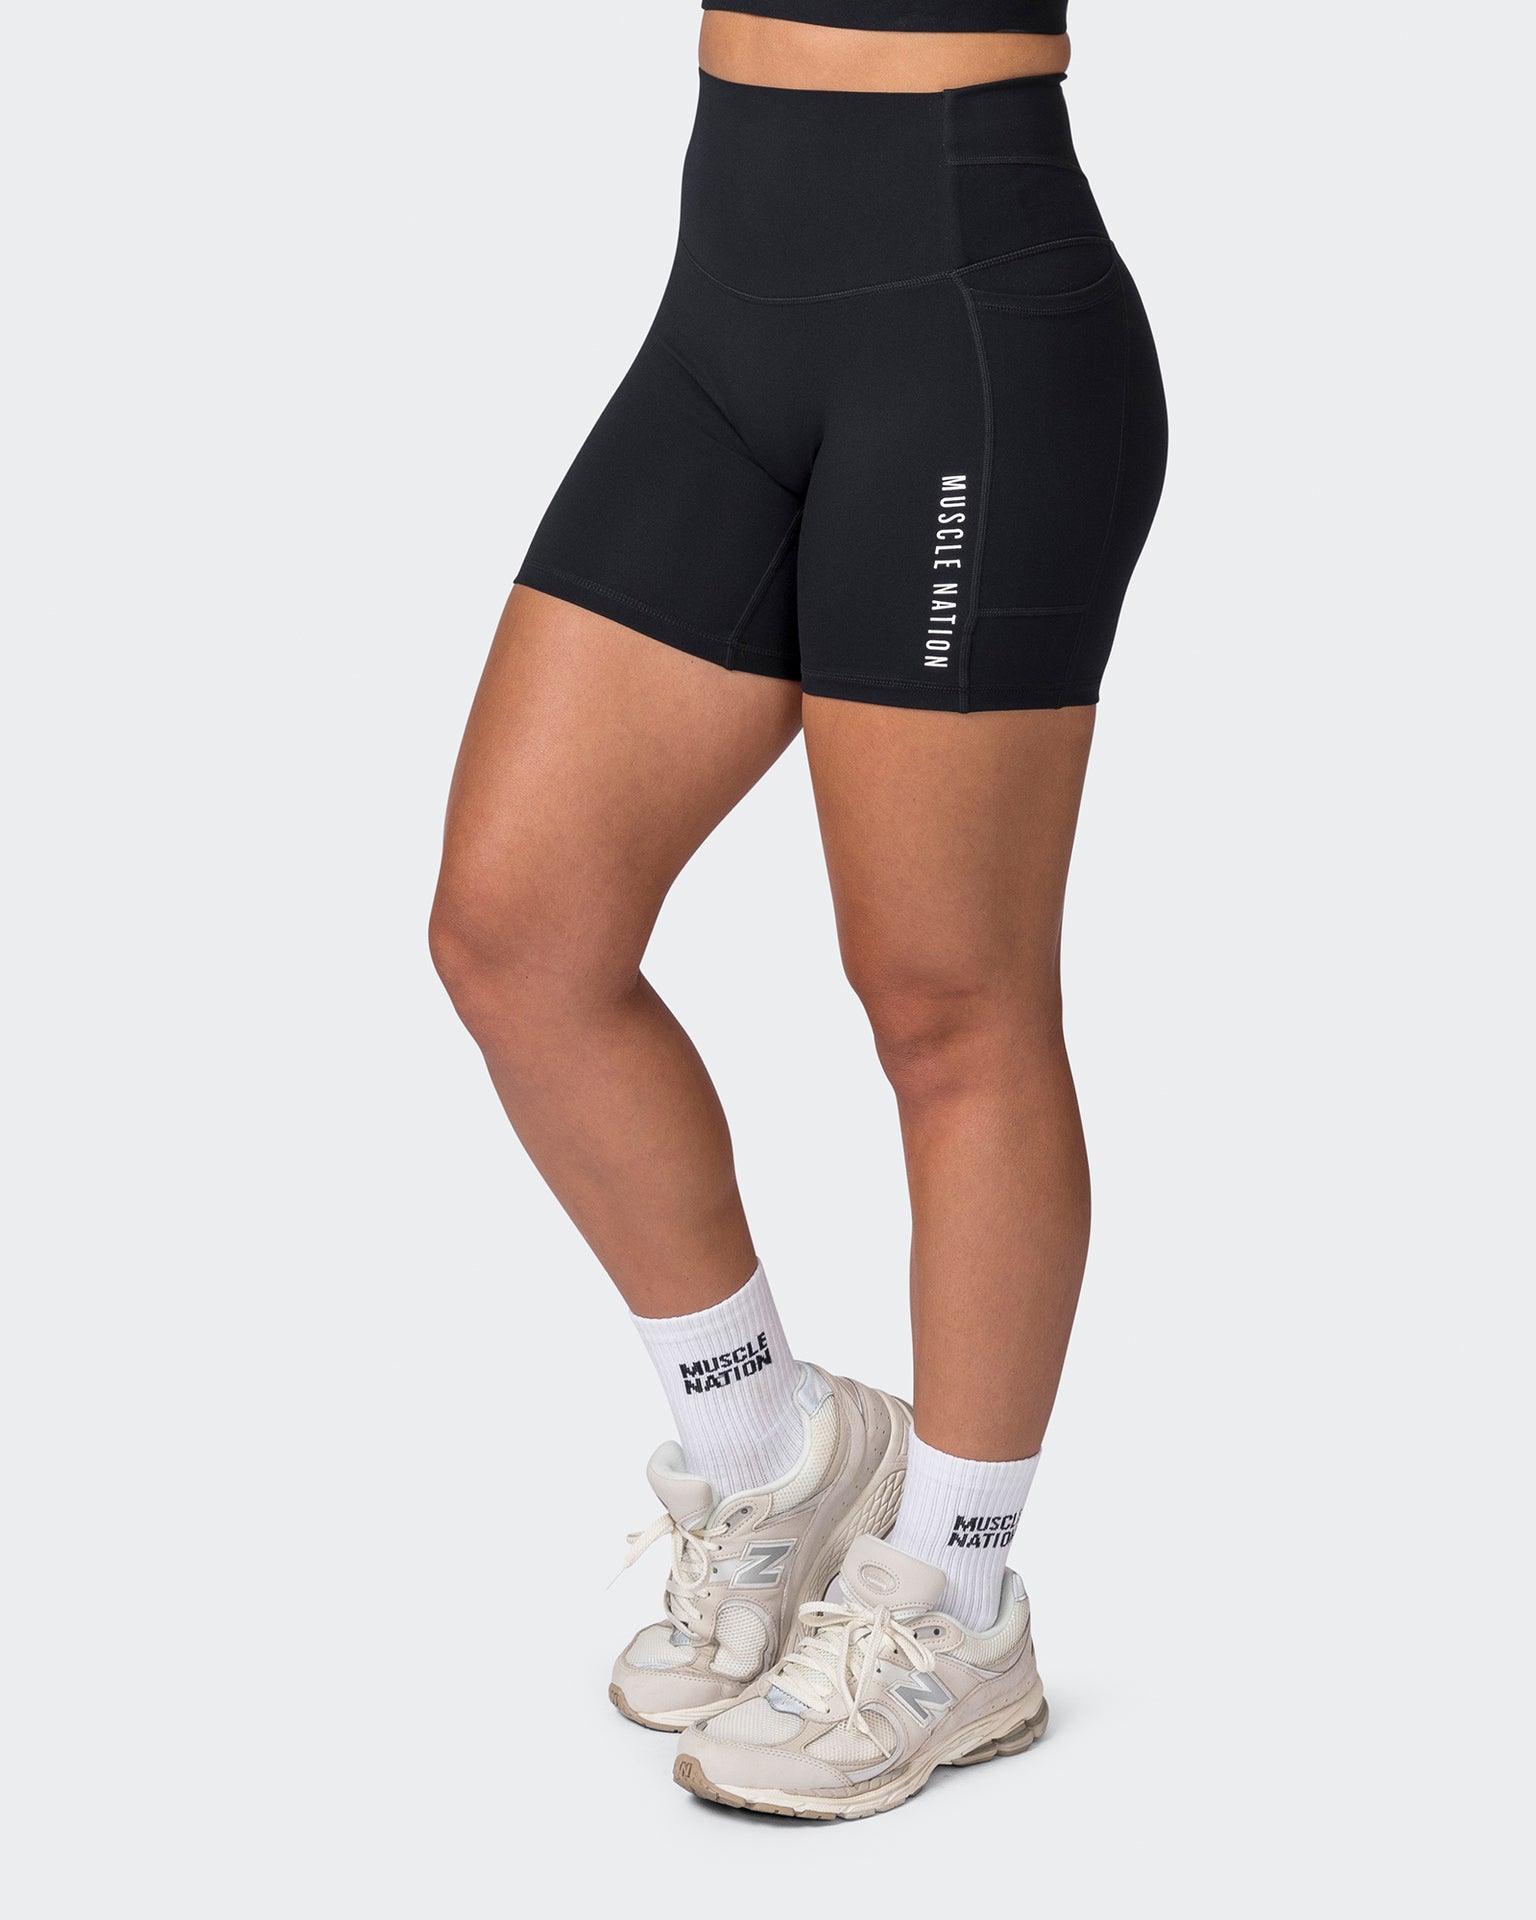 Muscle Nation Bike Shorts Unrivalled Everyday Bike Shorts - Black